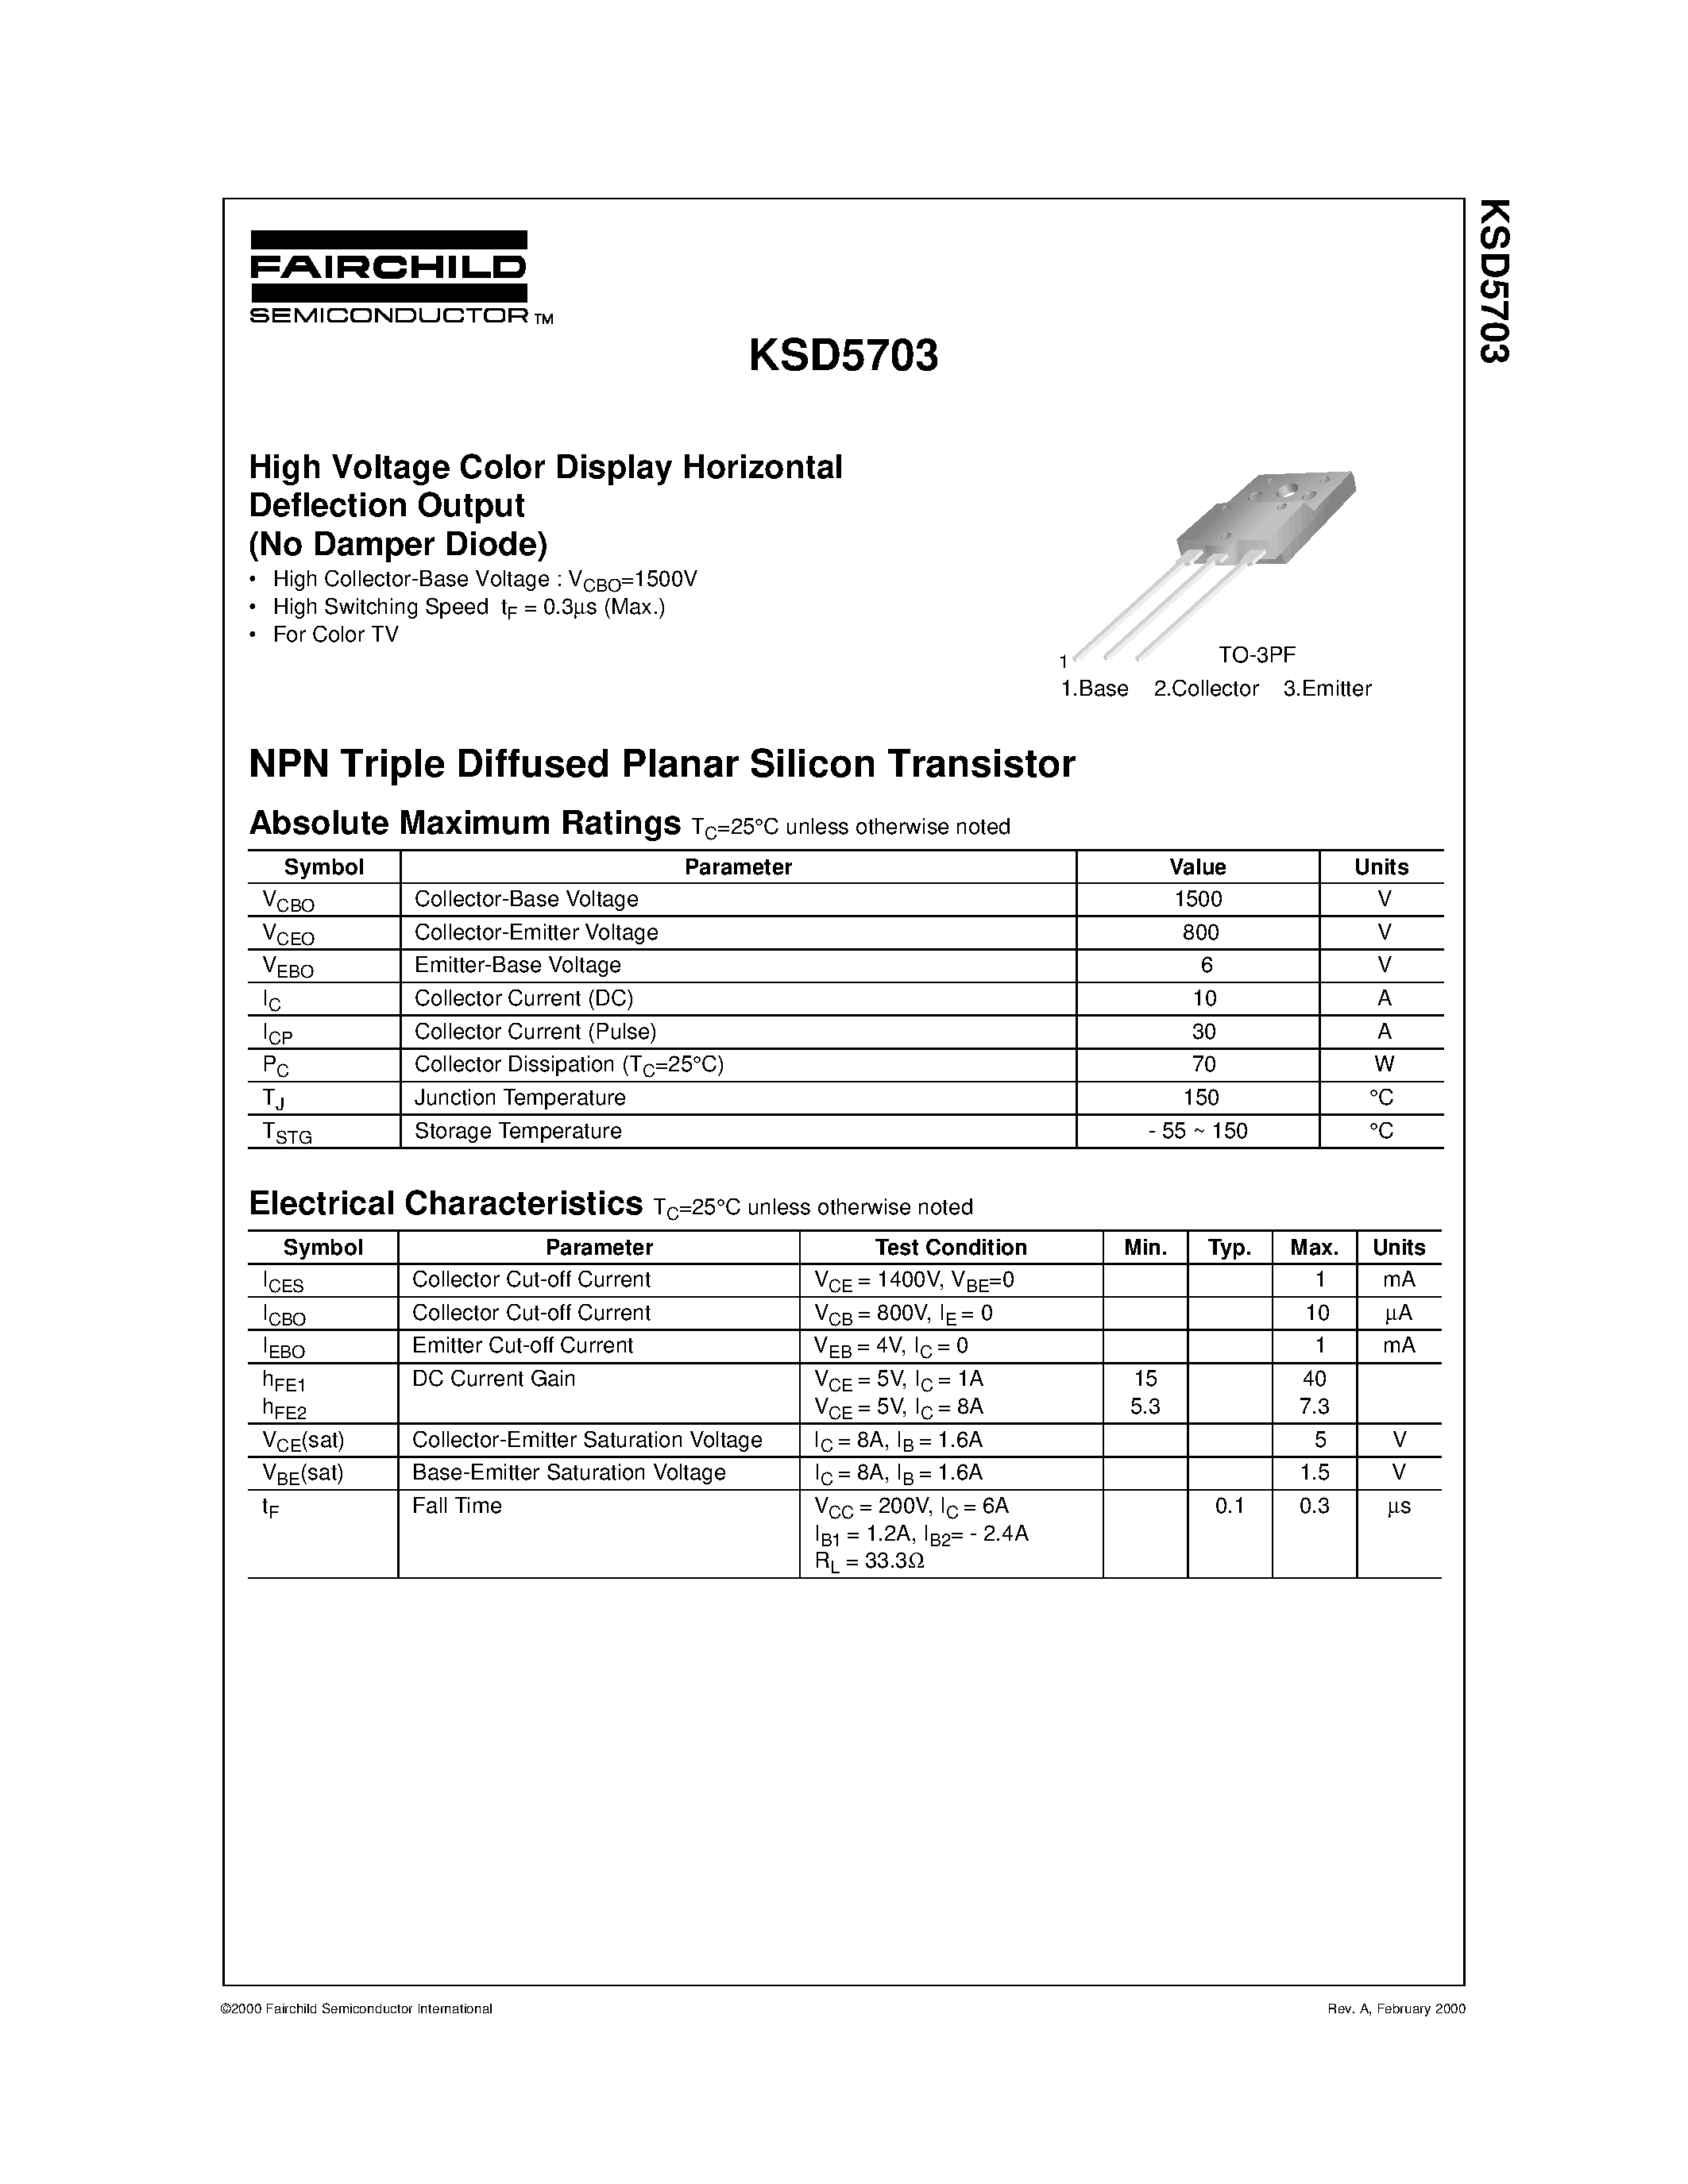 Datasheet KSD5703 - High Voltage Color Display Horizontal Deflection Output (No Damper Diode) page 1